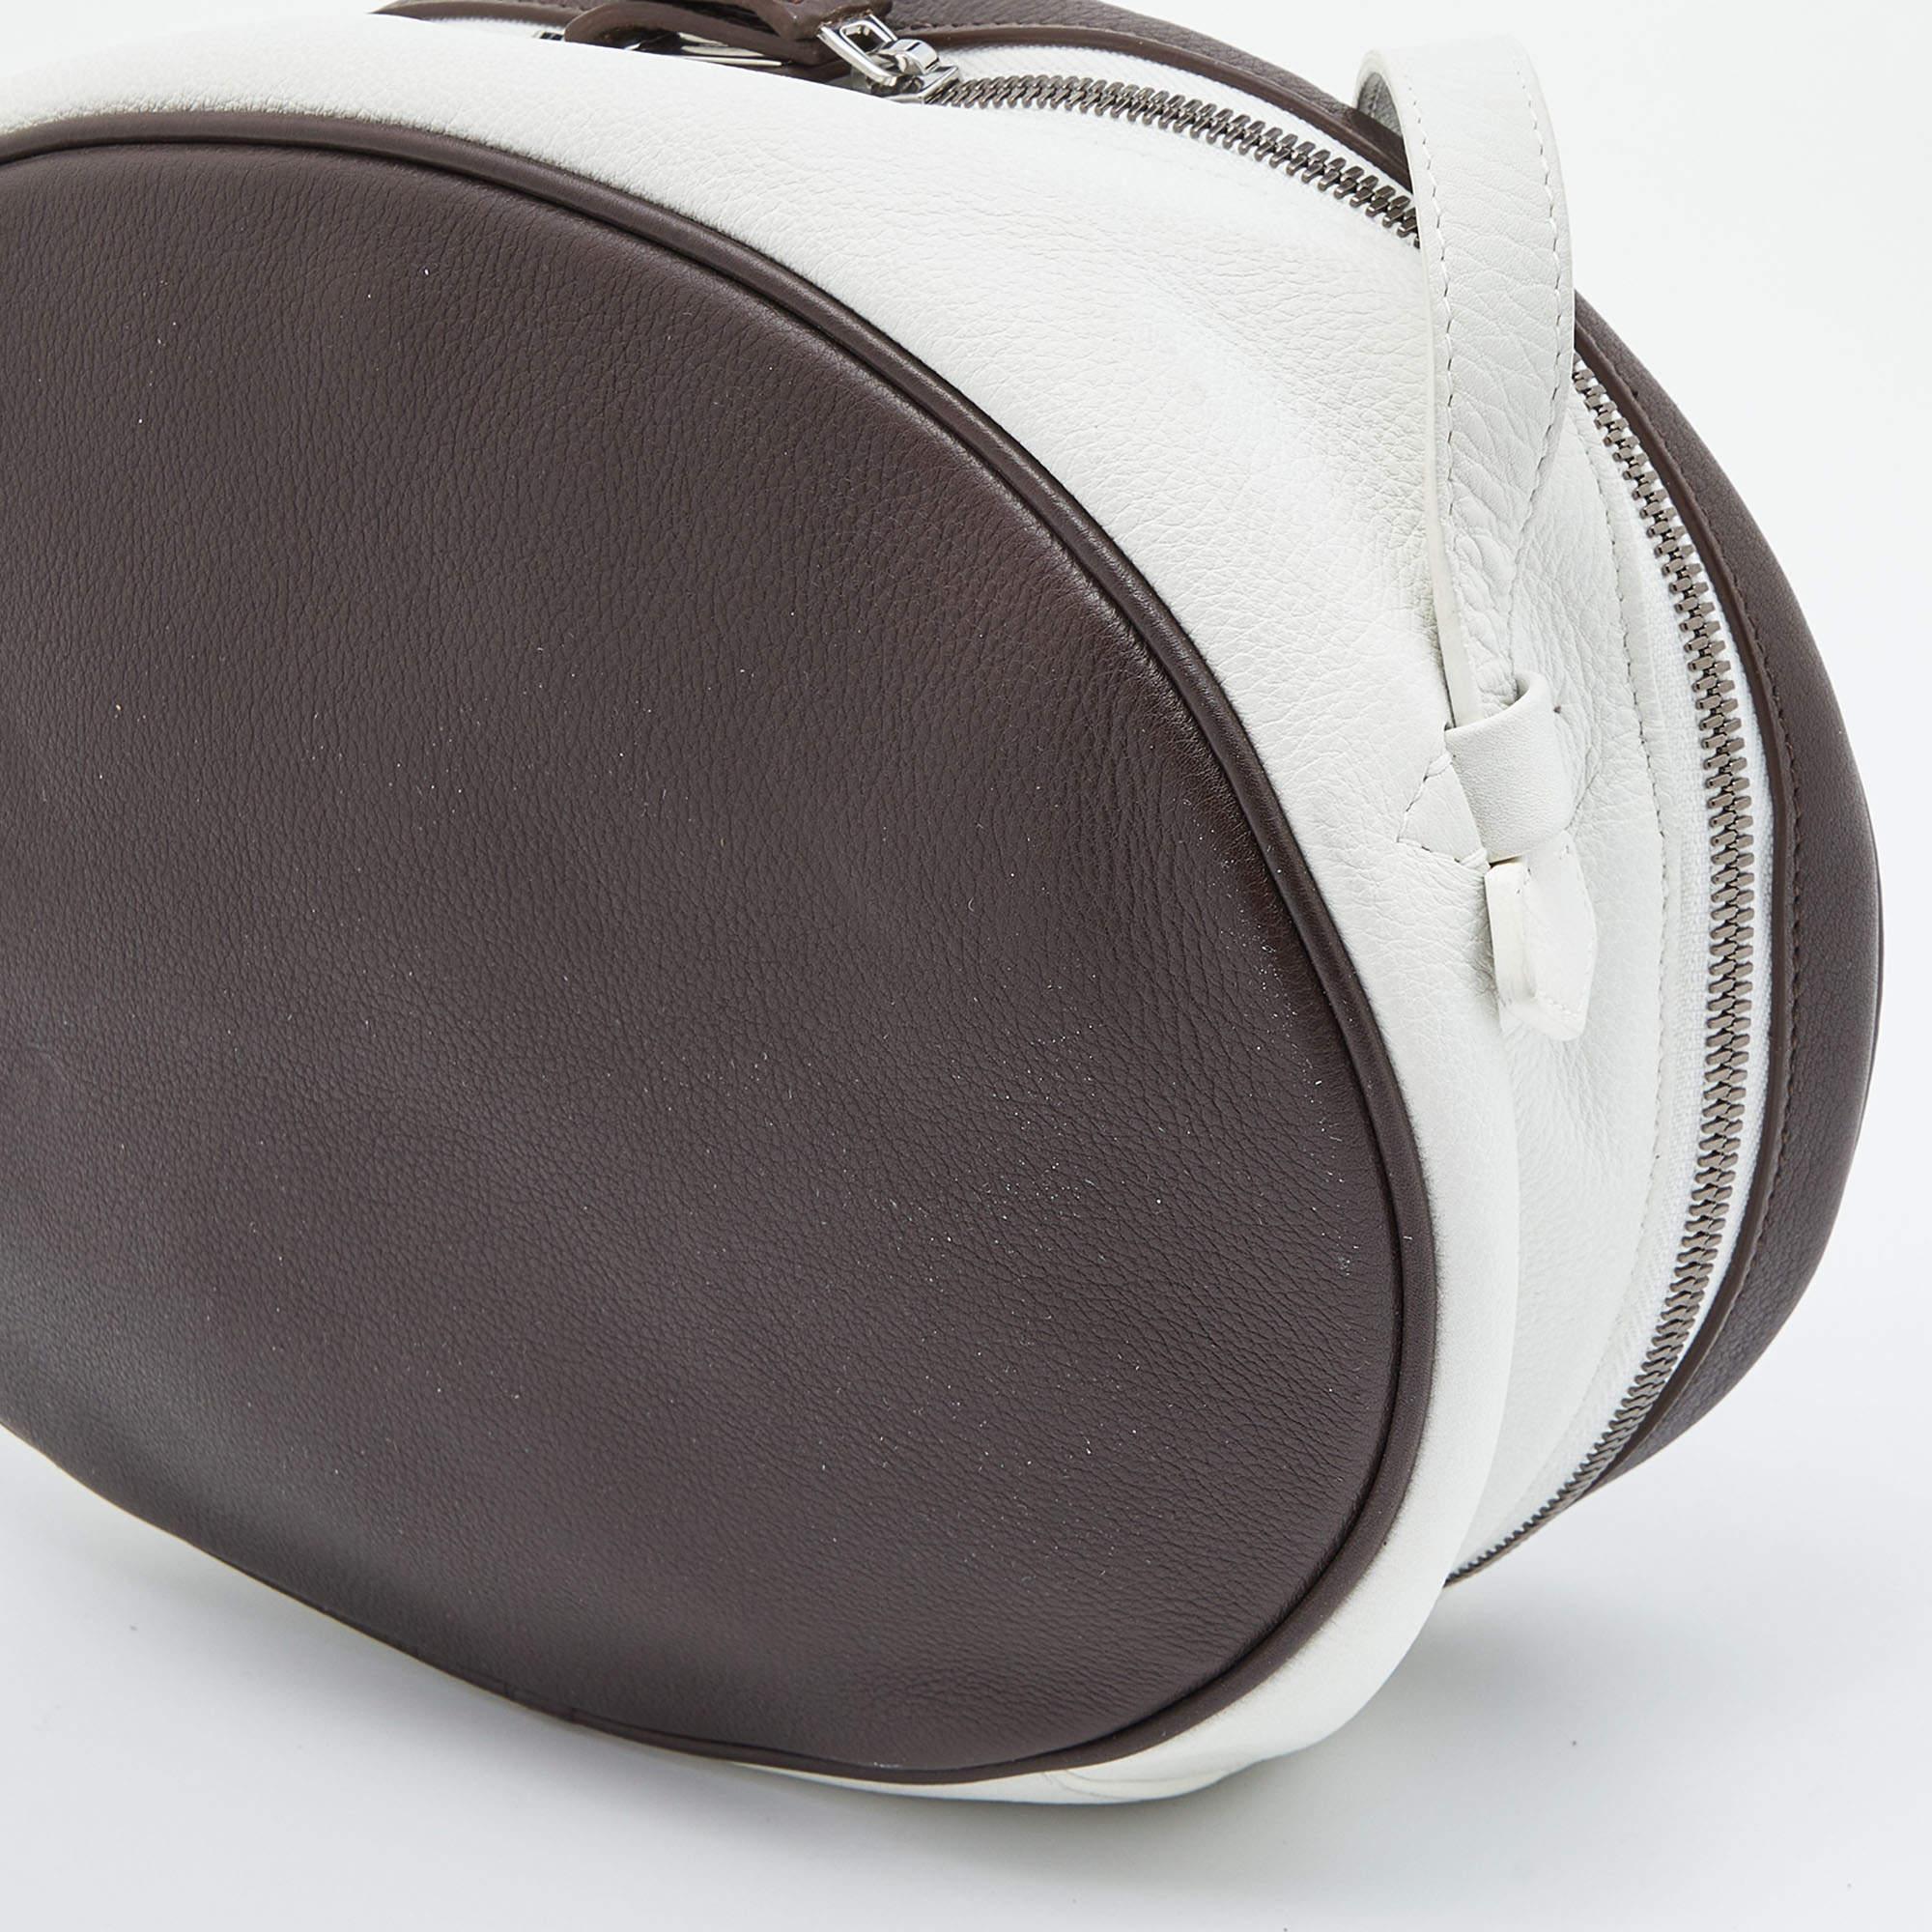 Balenciaga Brown/White Leather Top Handle Bag 2